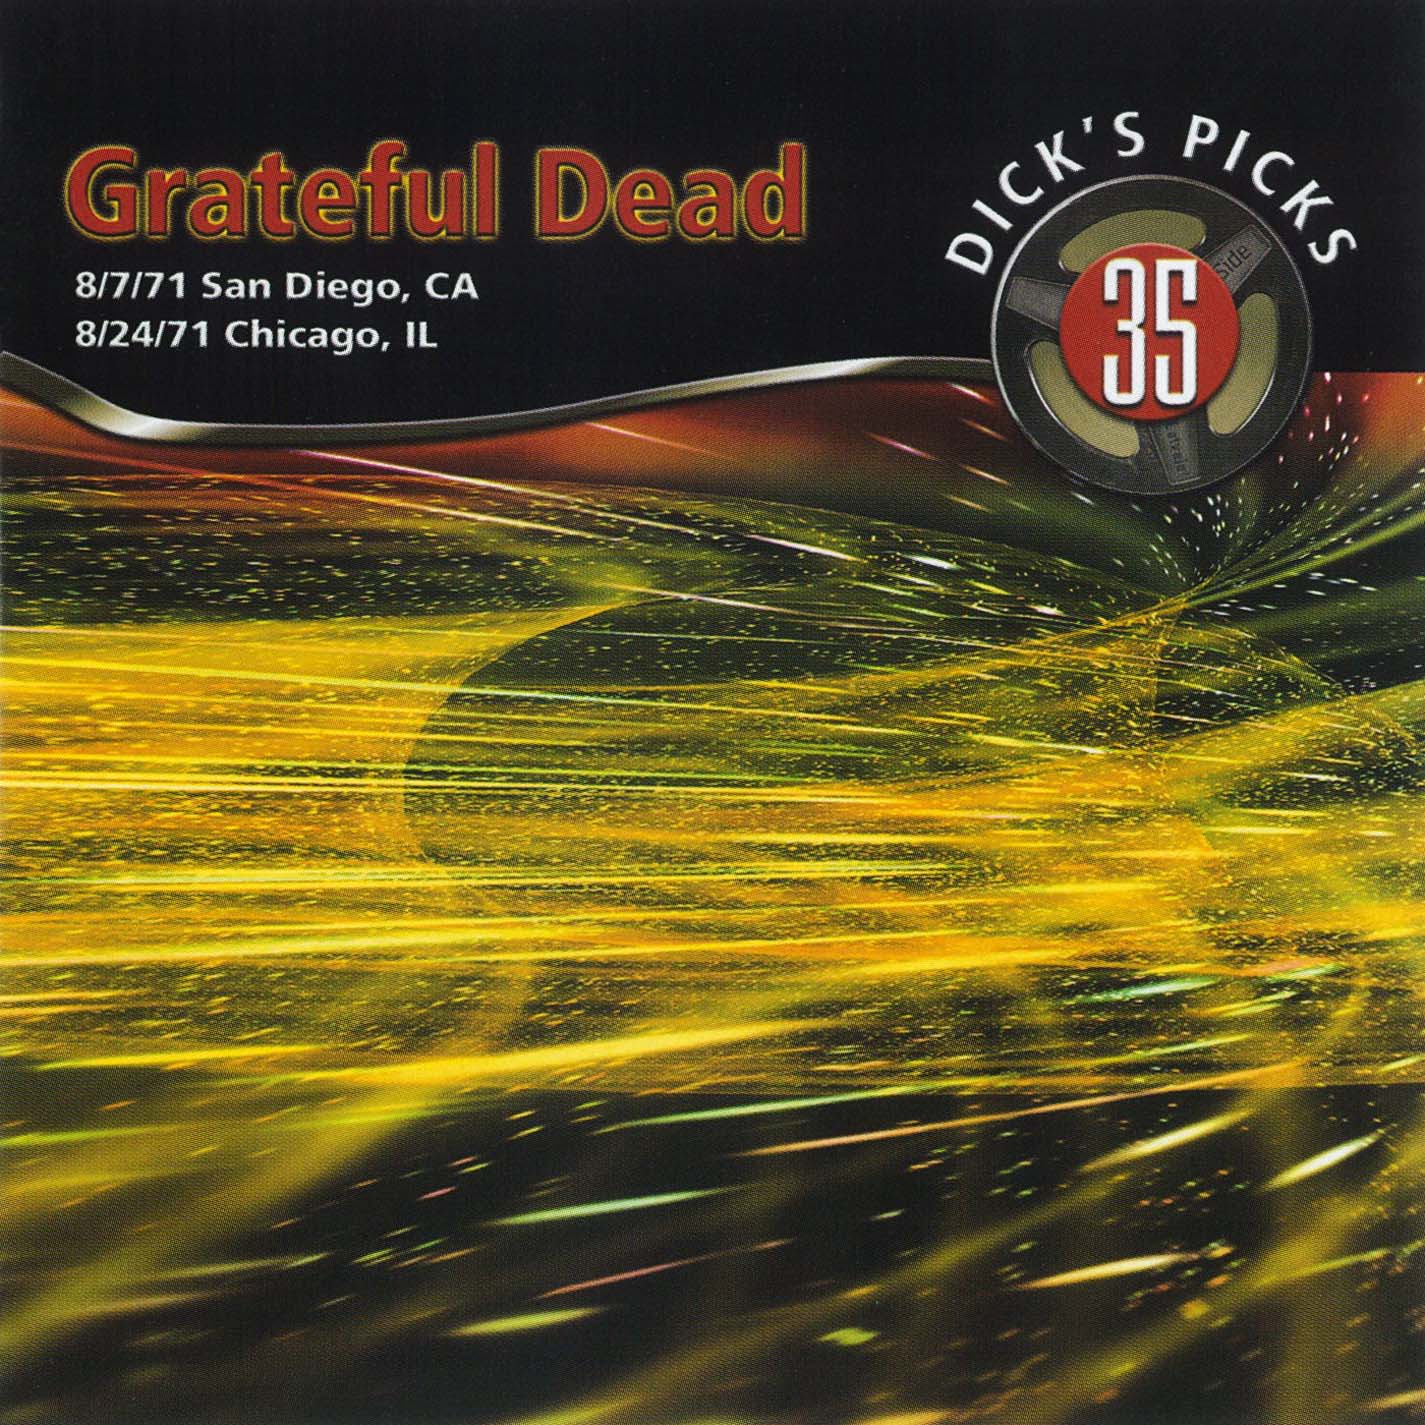 Grateful Dead Dick's Picks 35 album cover artwork